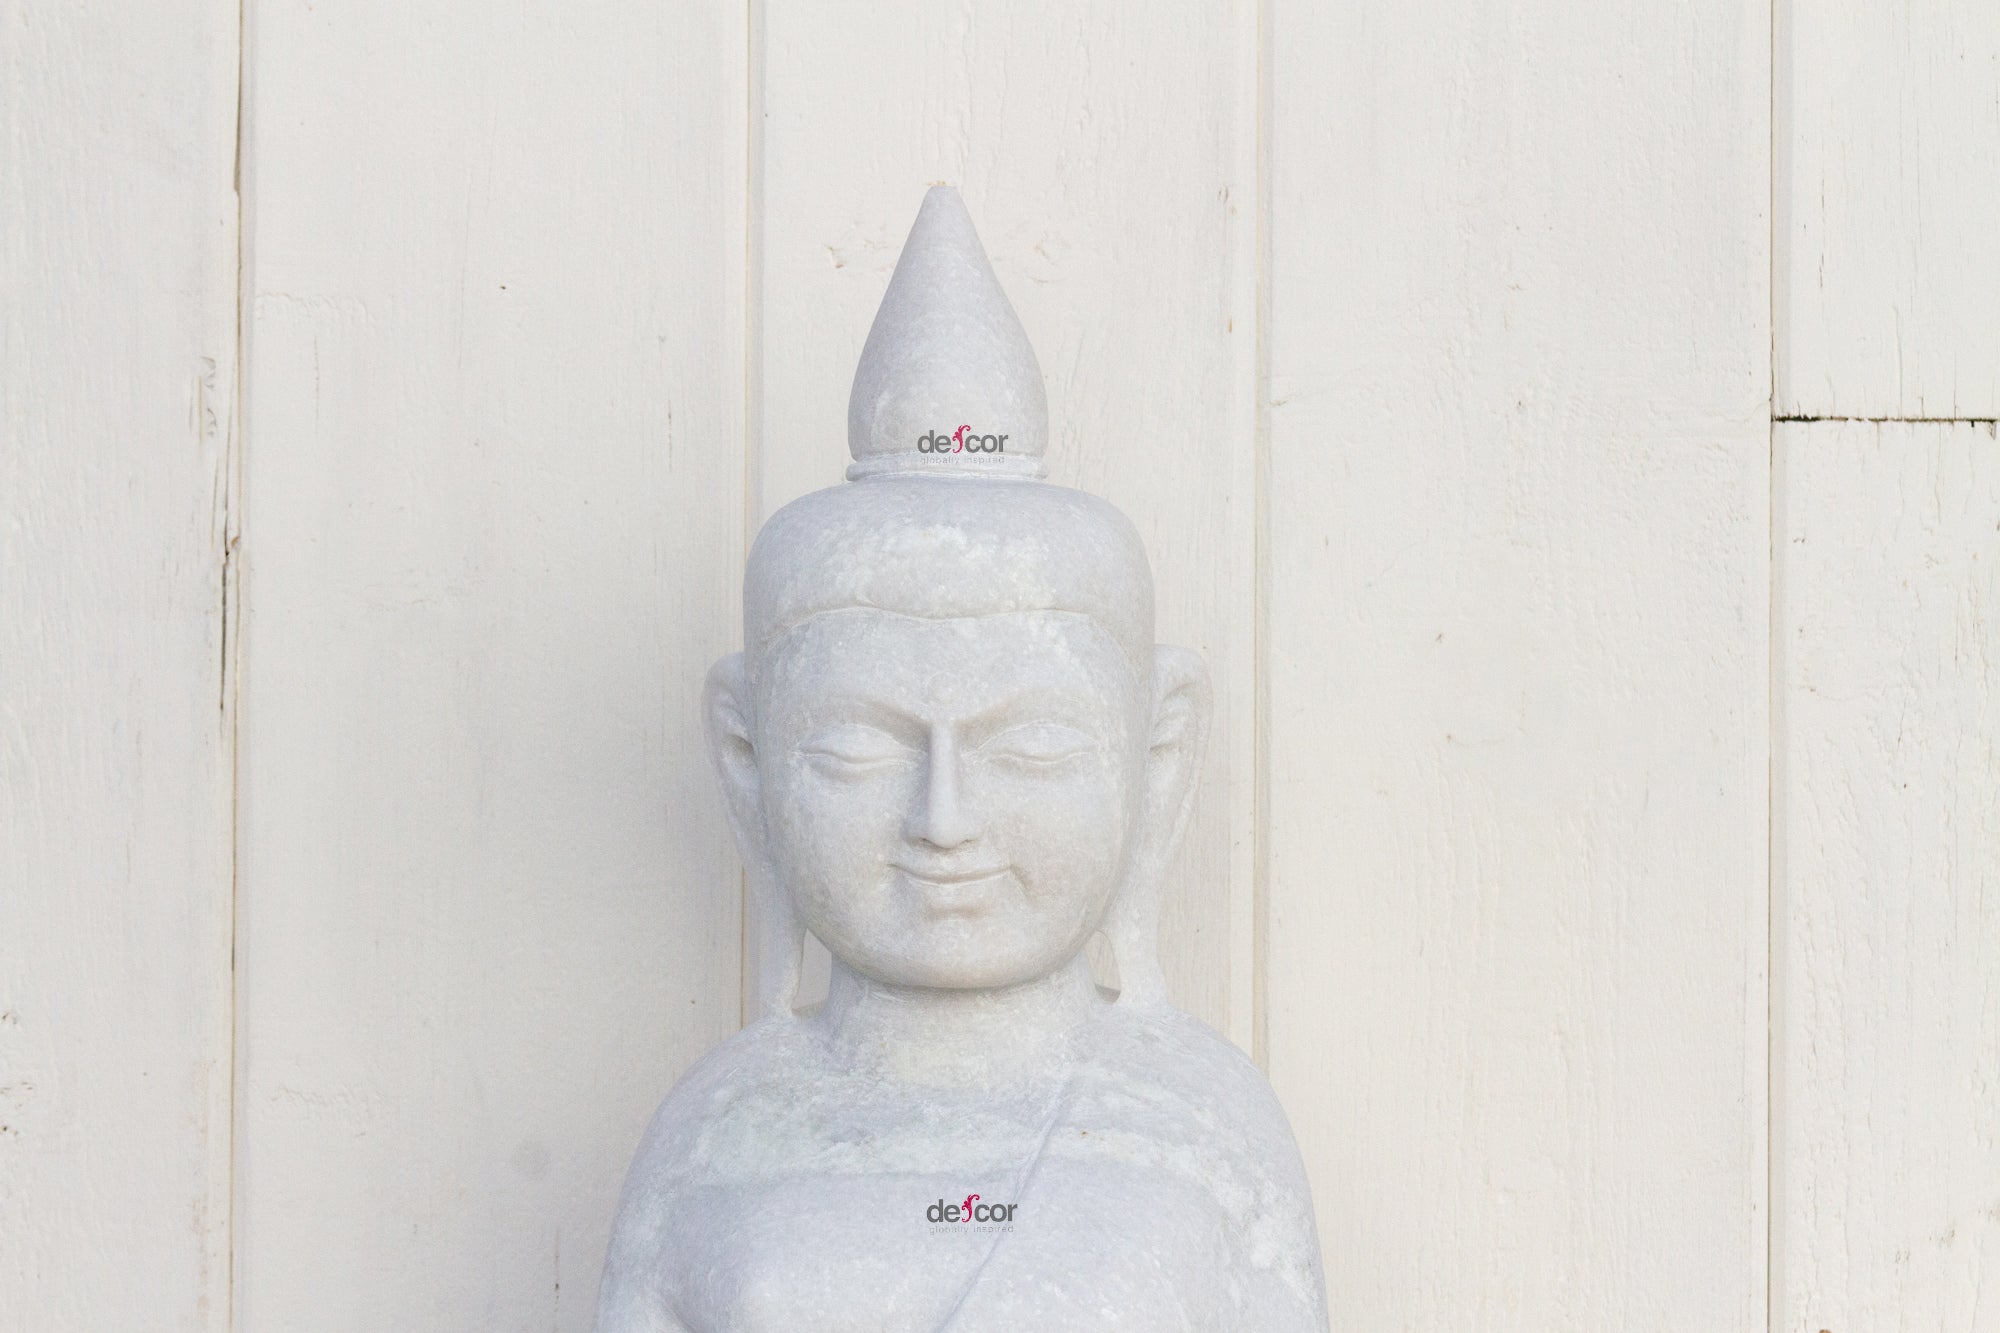 DE-COR | Ispirazione globale, Buddha birmano moderno bianco puro